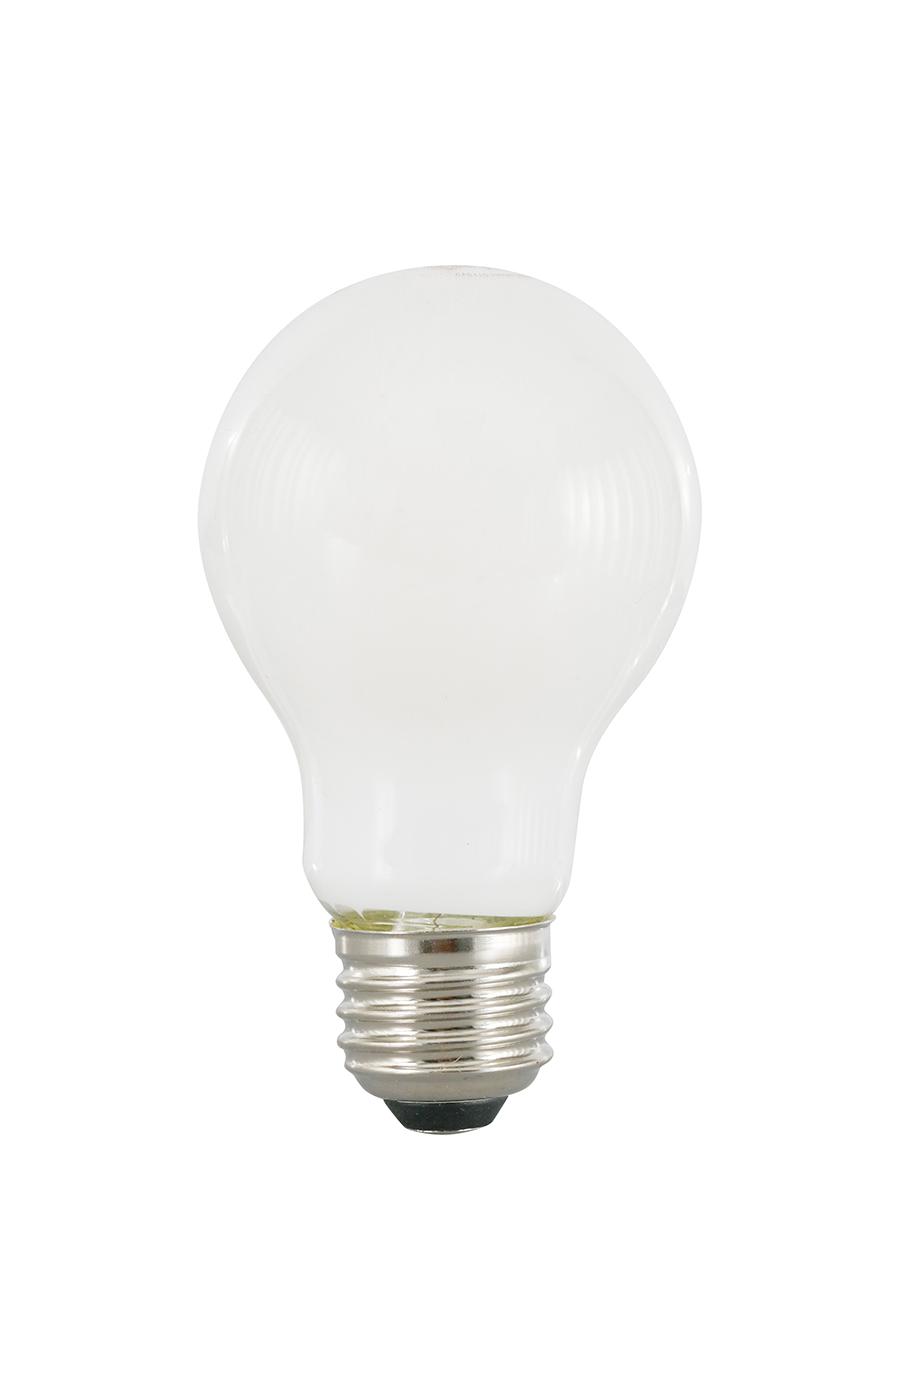 Sylvania TruWave A19 40-Watt Frosted LED Light Bulbs - Soft White; image 2 of 2